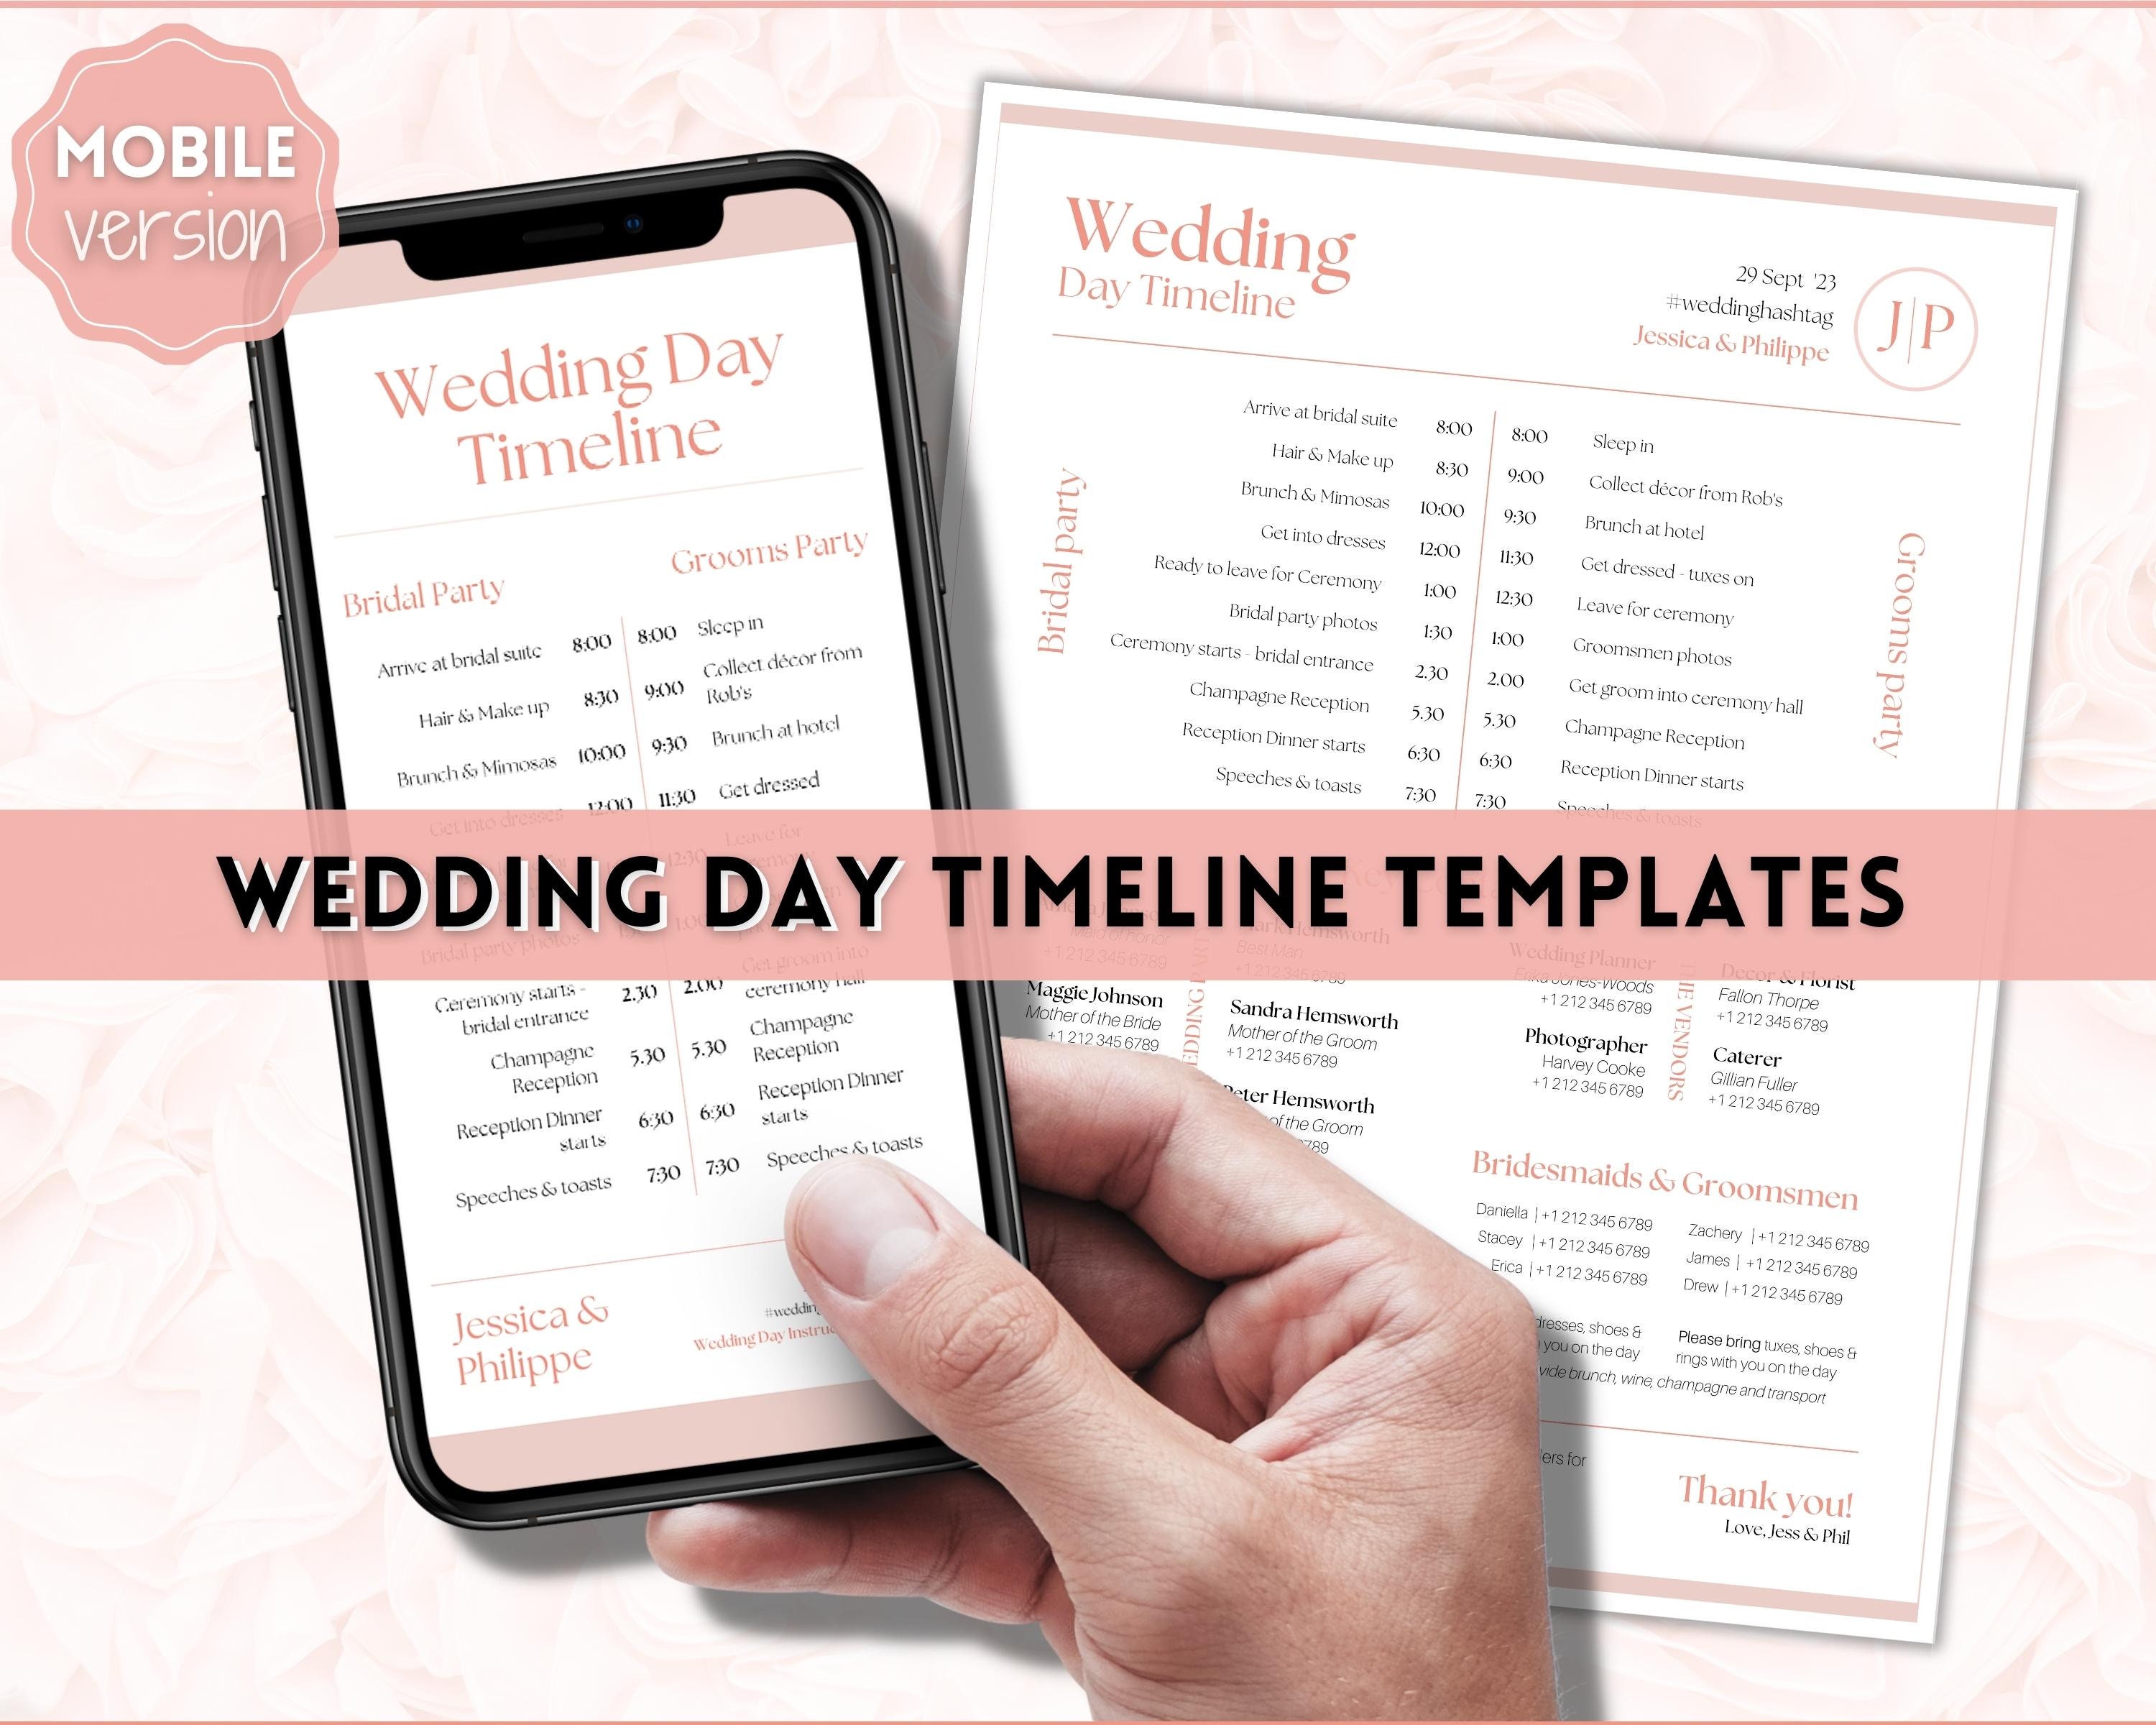 How To Plan Your Wedding Timeline  Sample Wedding Reception Timeline